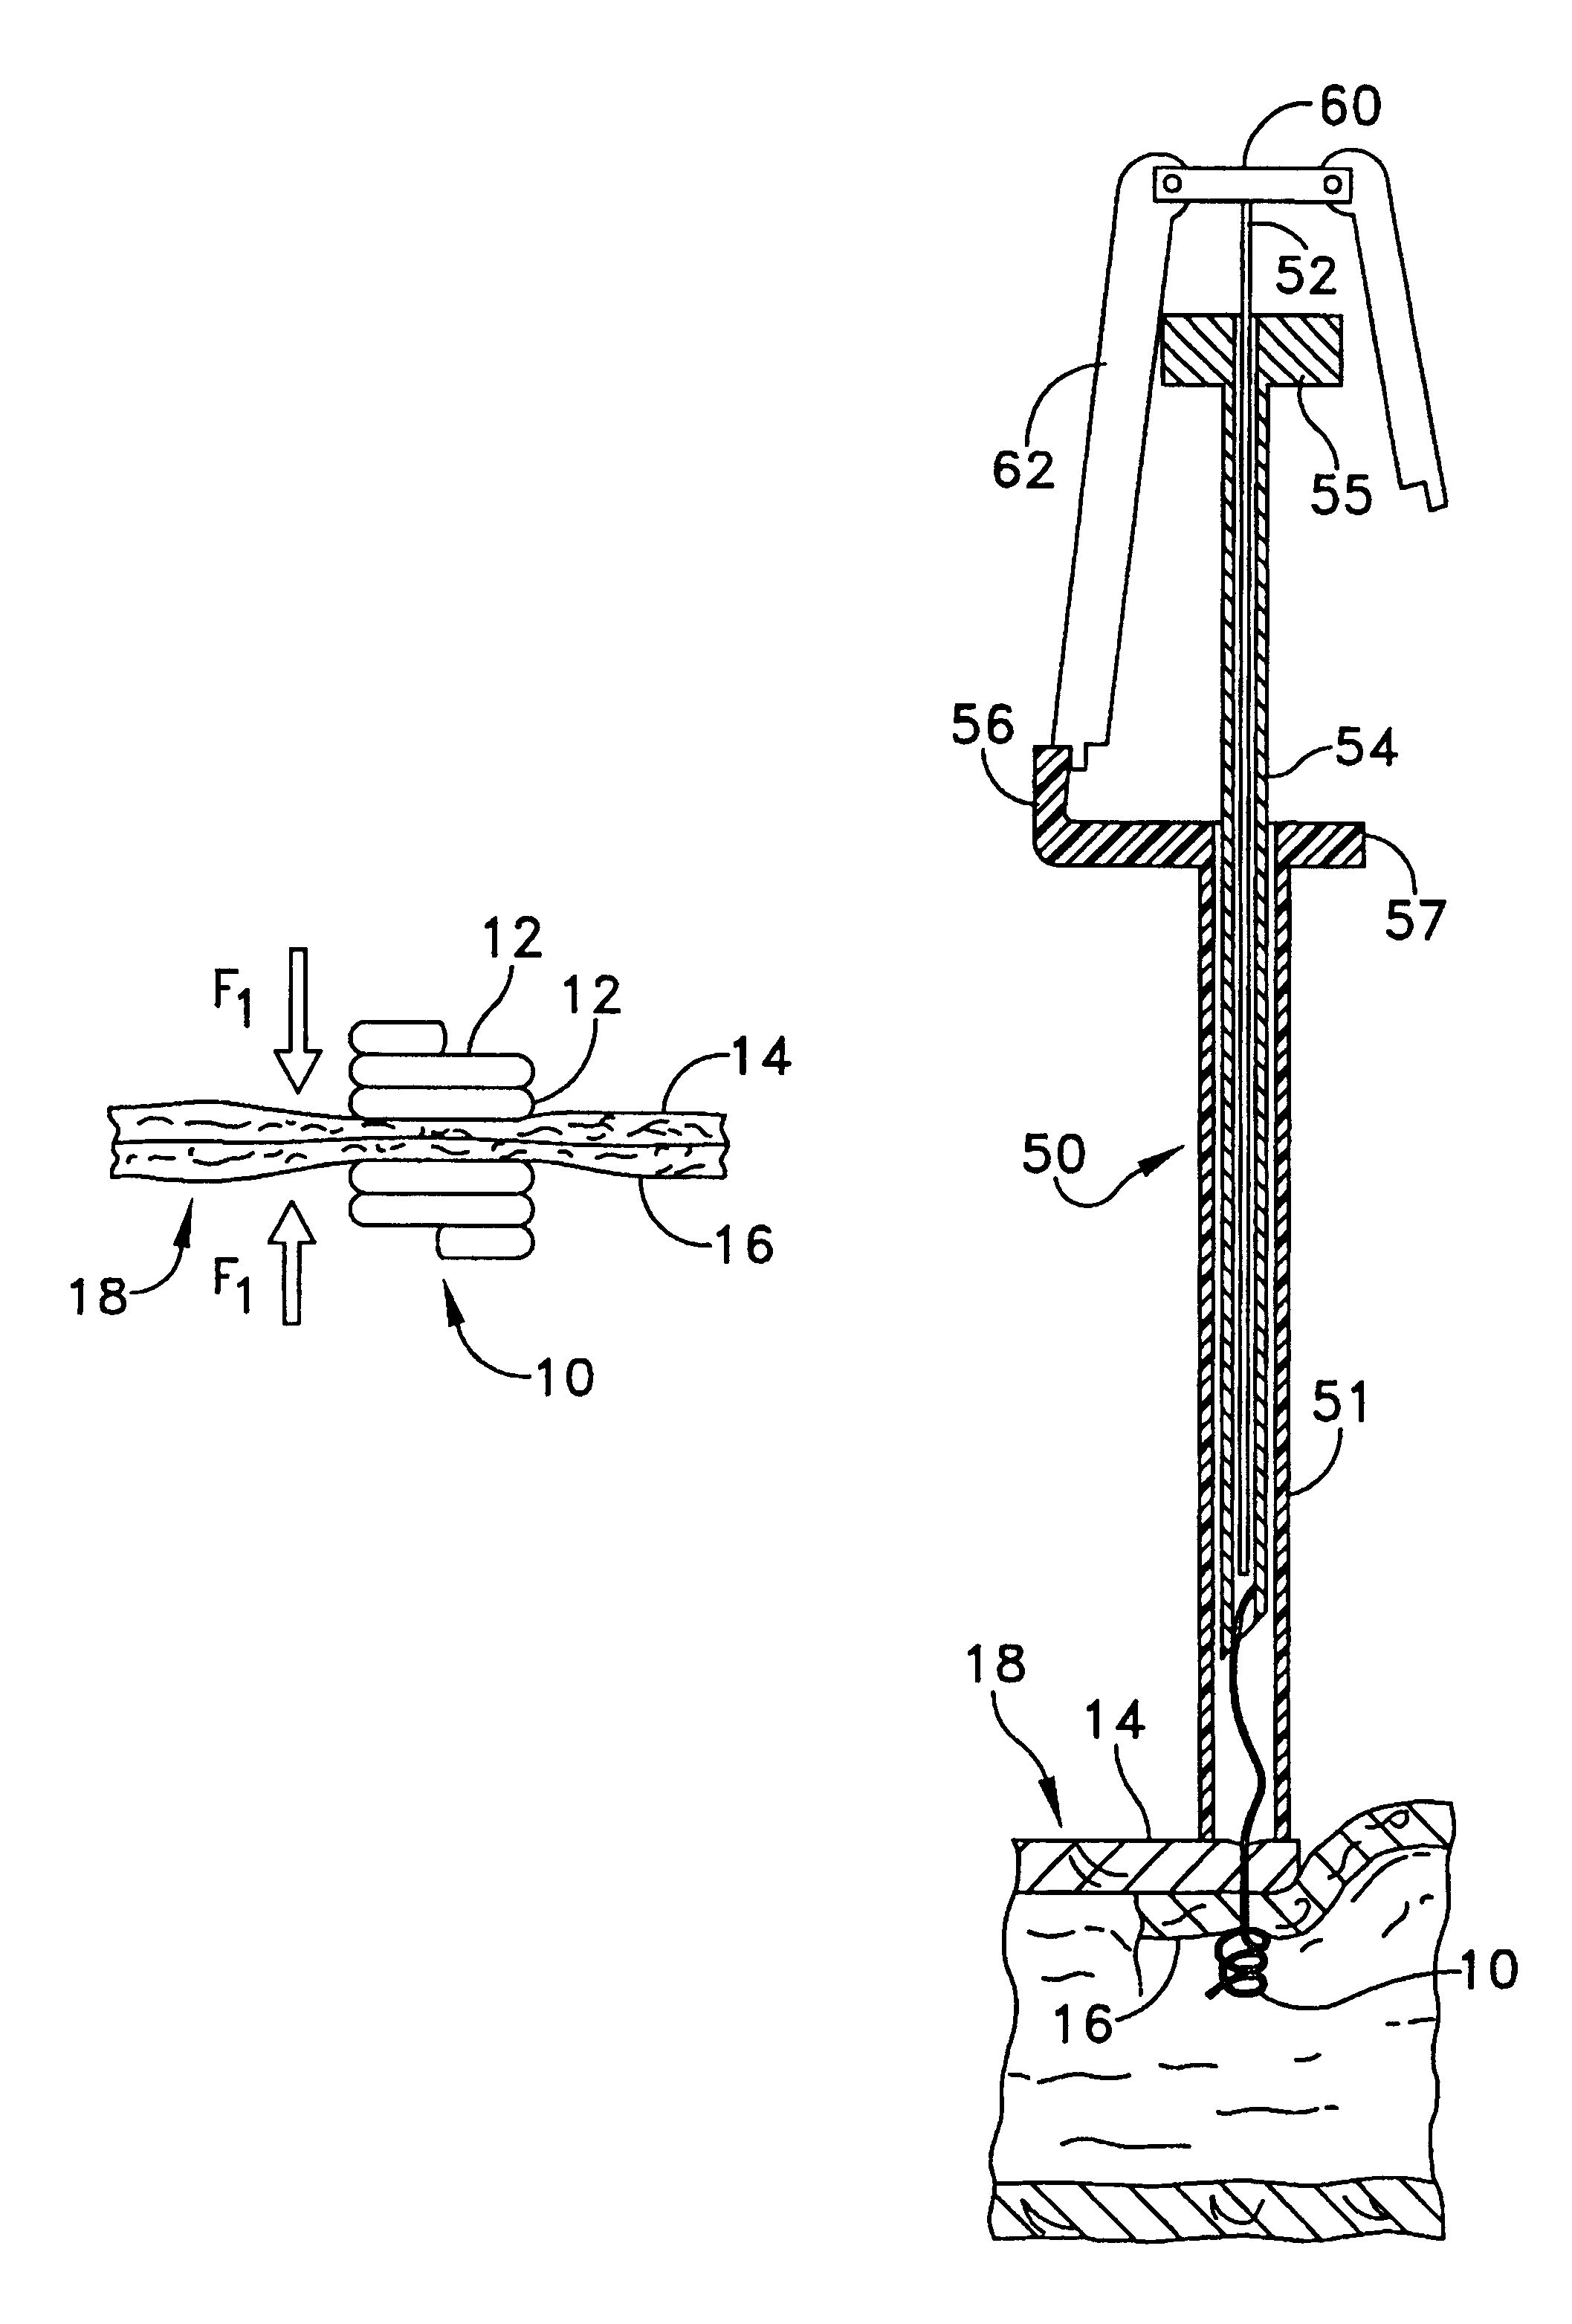 Multi-fastener surgical apparatus and method